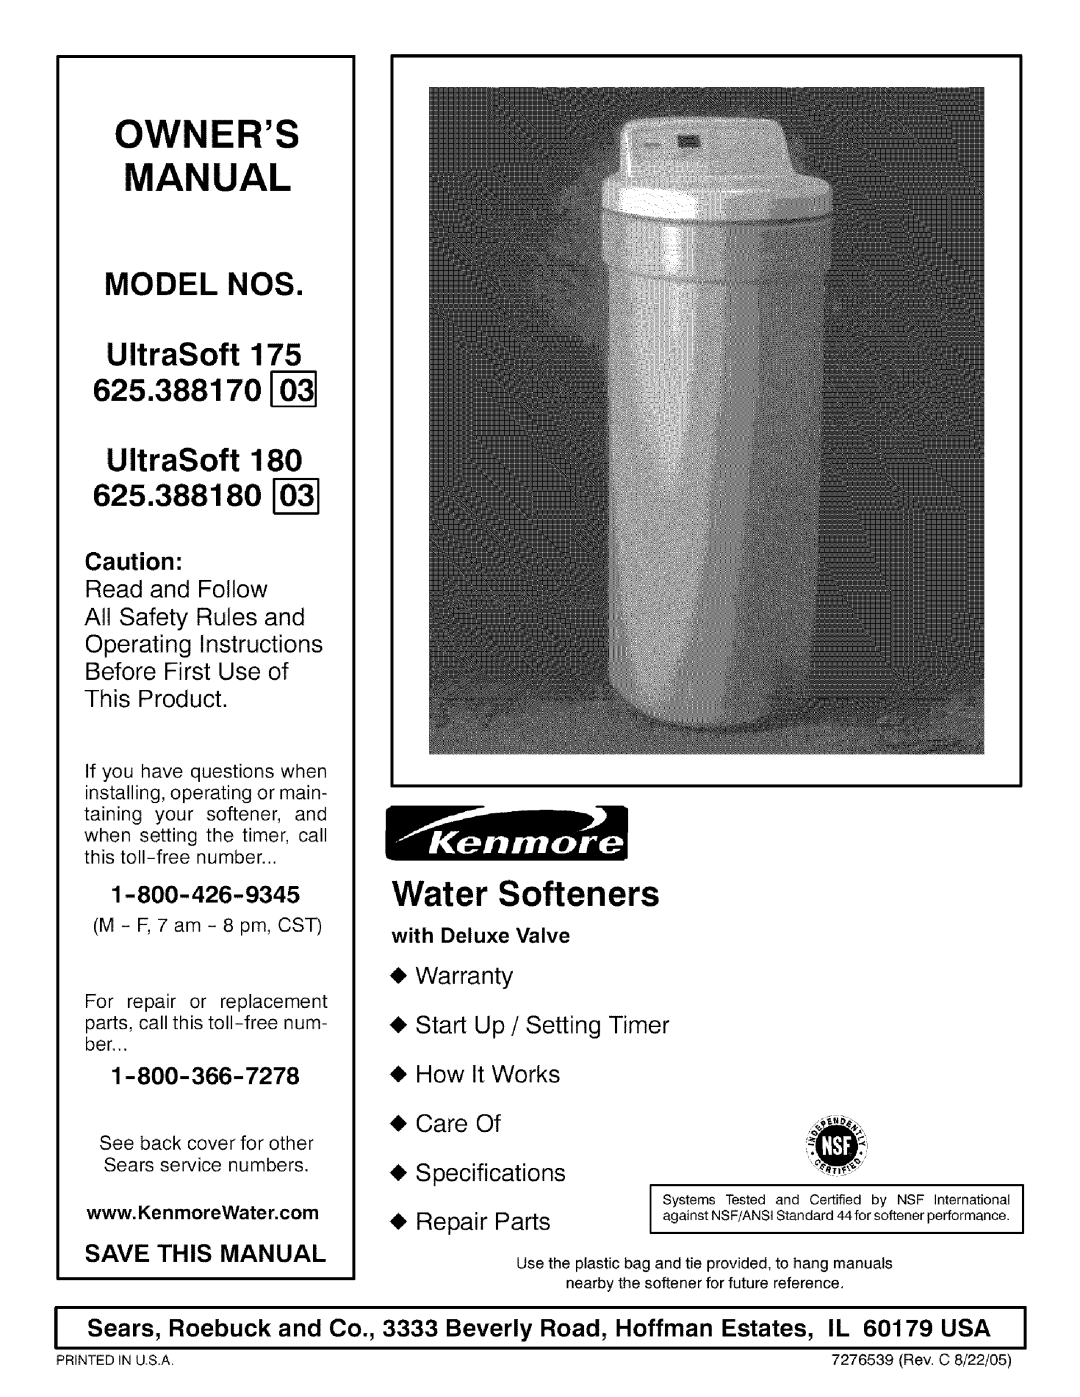 Kenmore owner manual Water Softeners, Model Nos, UltraSoft, 625.388170, 625.388180, Save This Manual, Owners Manual 